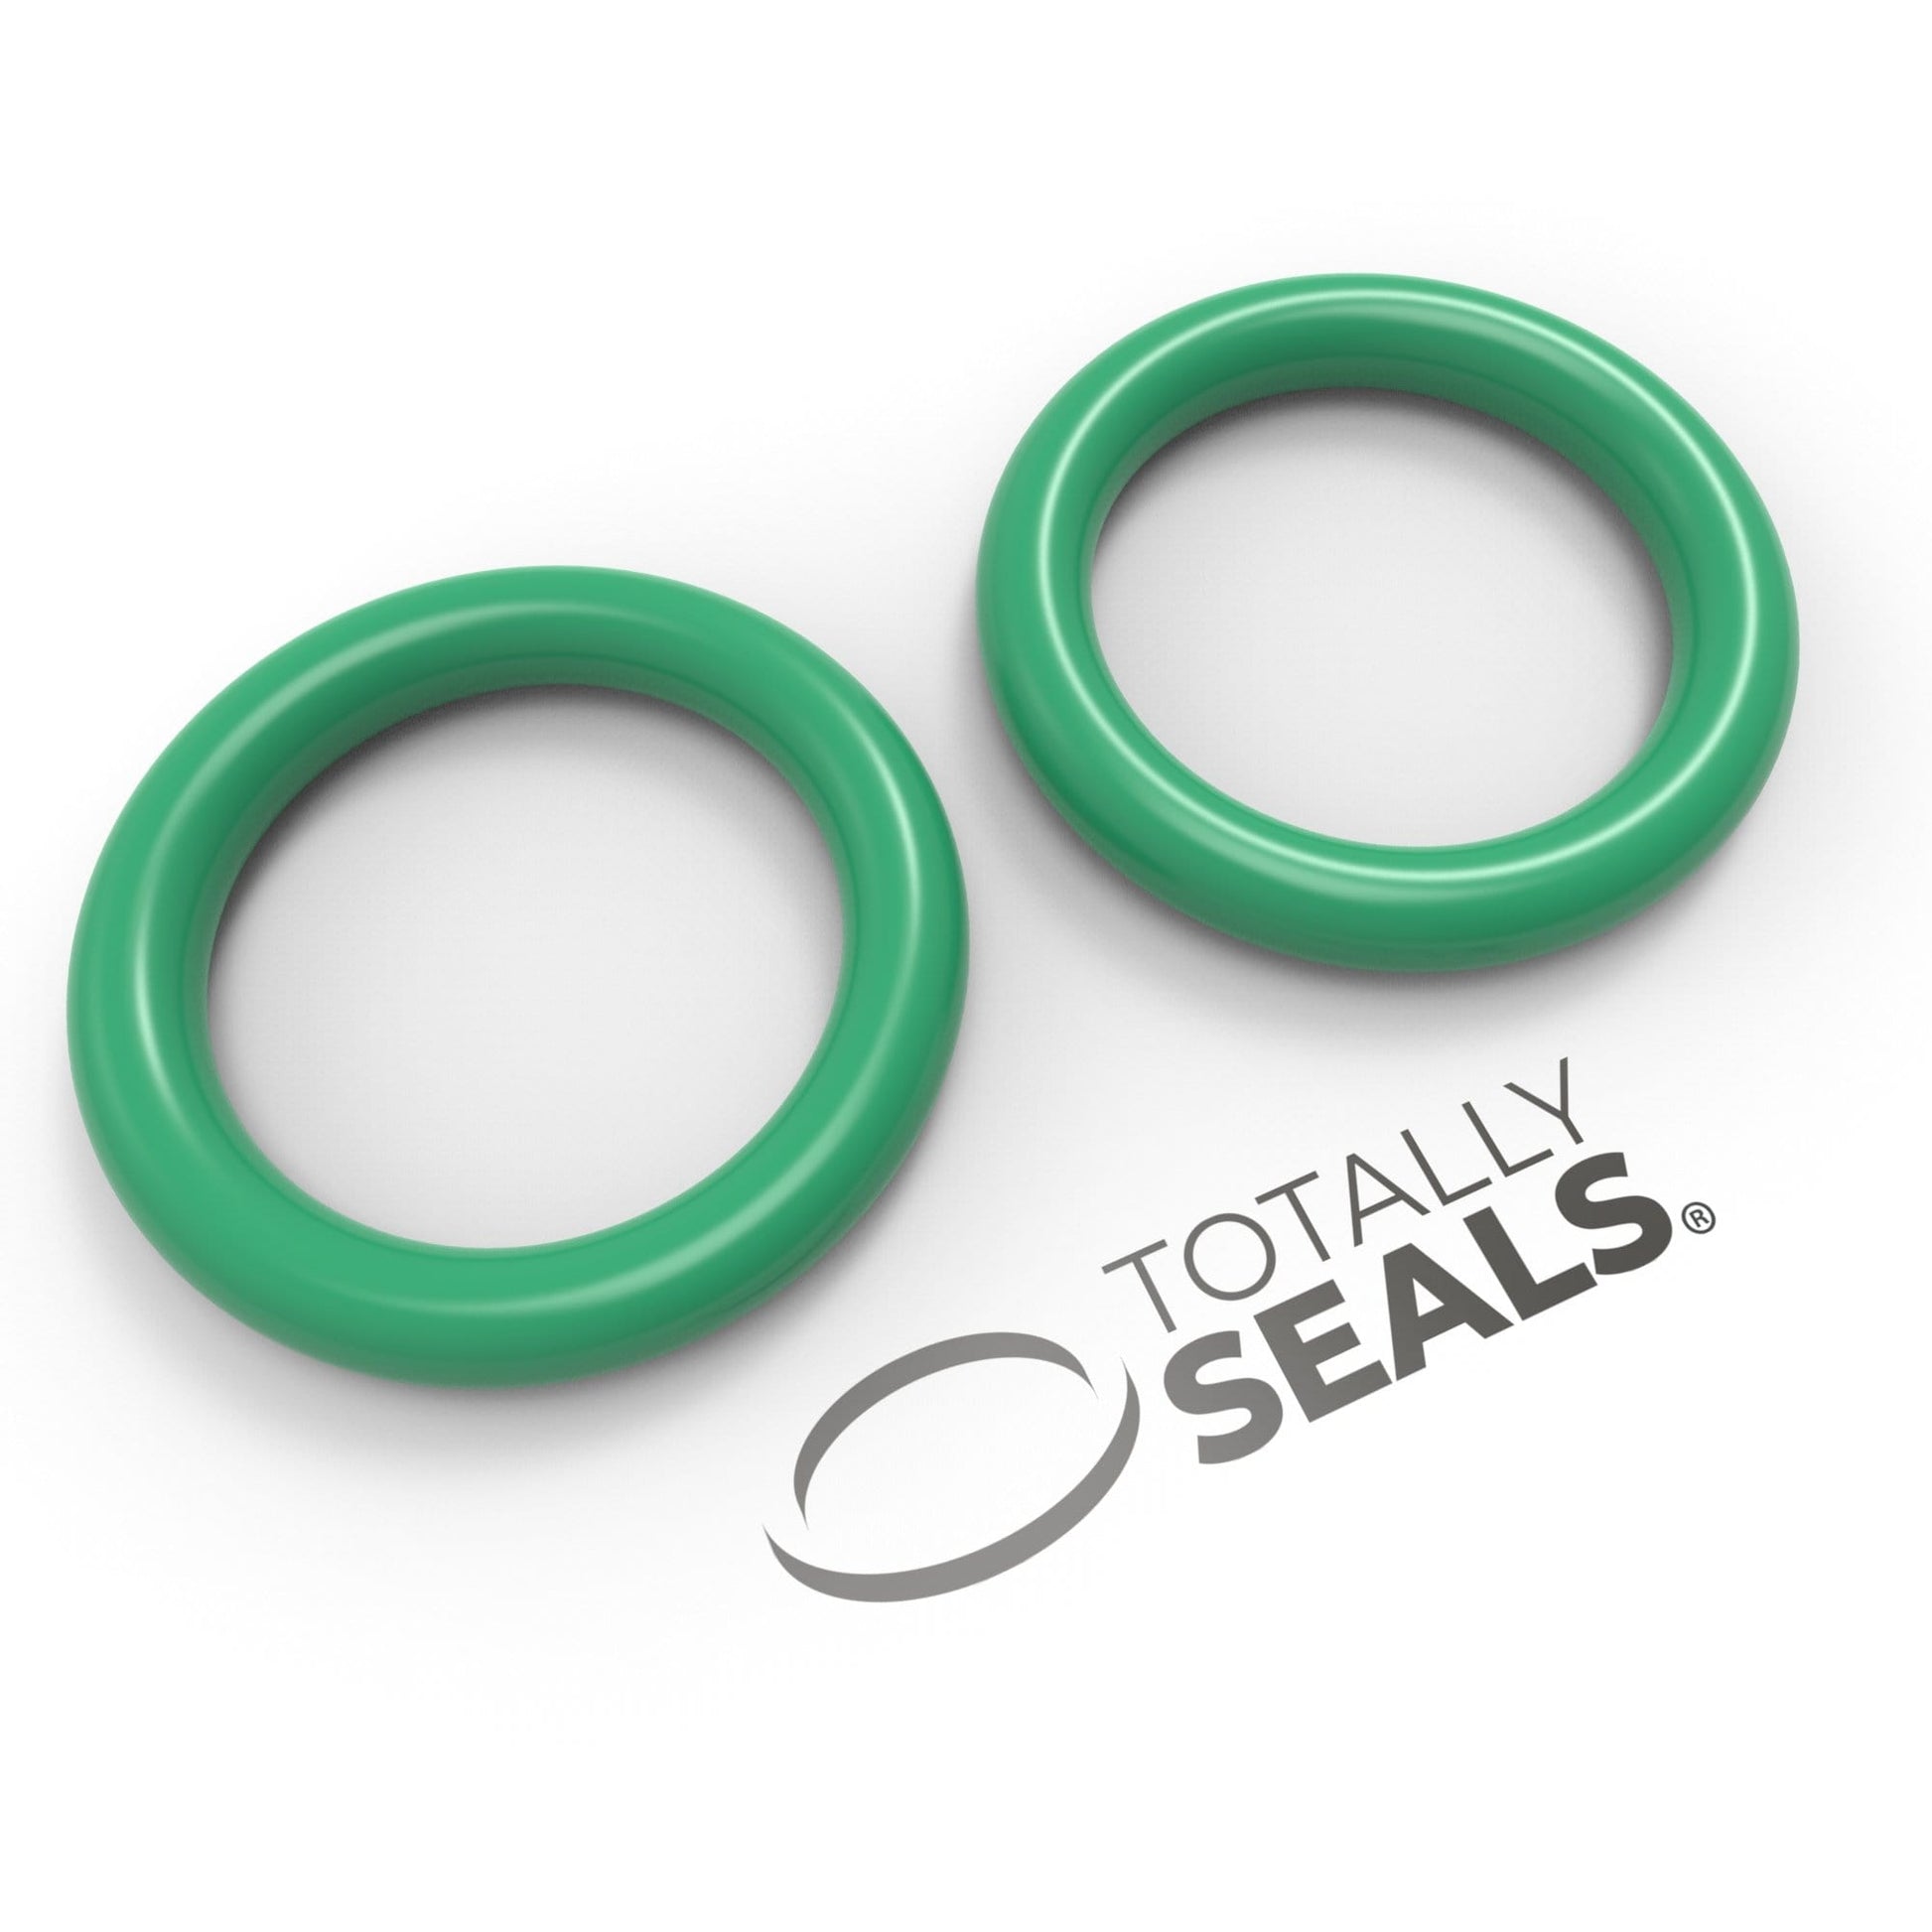 10mm x 2.5mm (15mm OD) FKM (Viton™) O-Rings - Totally Seals®